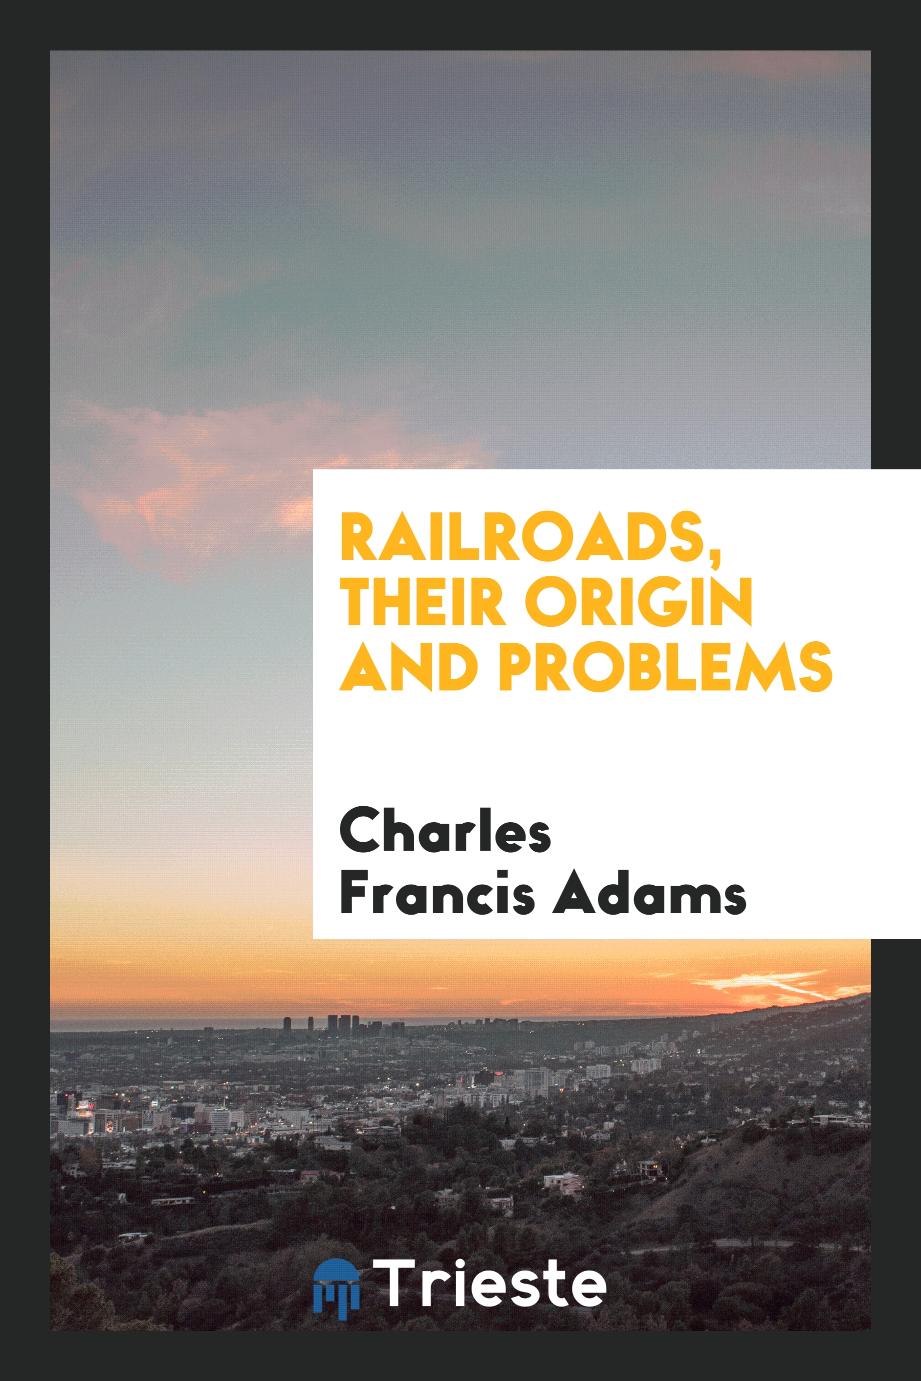 Railroads, their origin and problems